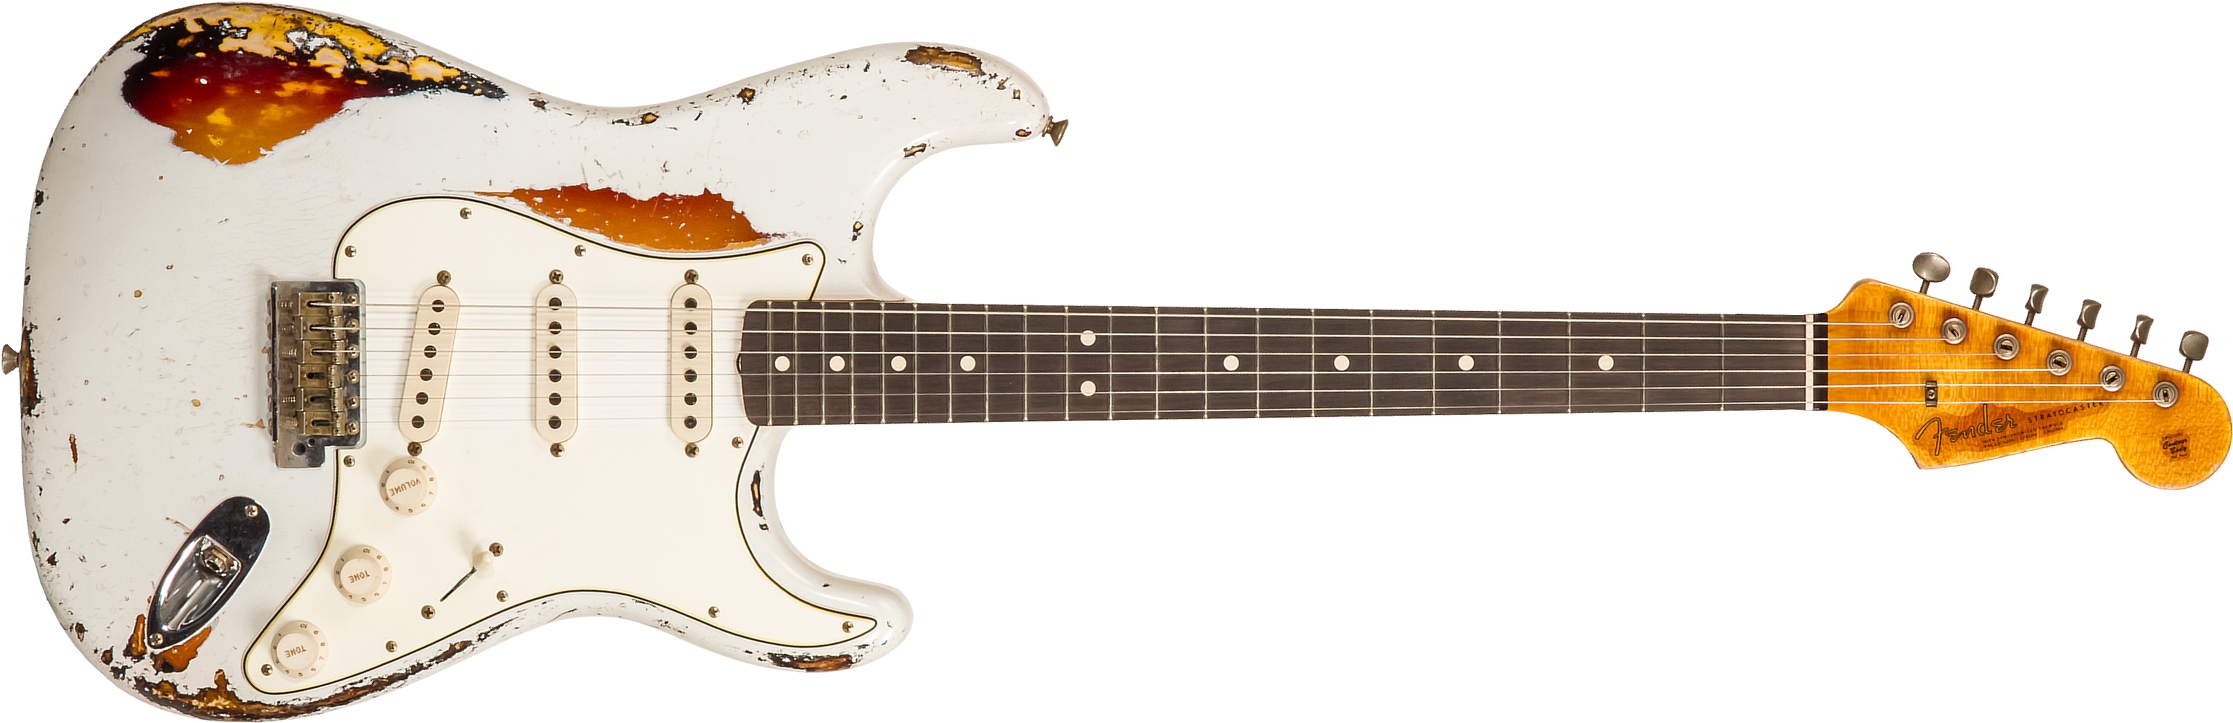 Fender Custom Shop Strat 1963 Masterbuilt K.mcmillin Bla #r117544 - Ultimate Relic Olympic White/3-color Sunburst - Guitare Électrique Forme Str - Mai